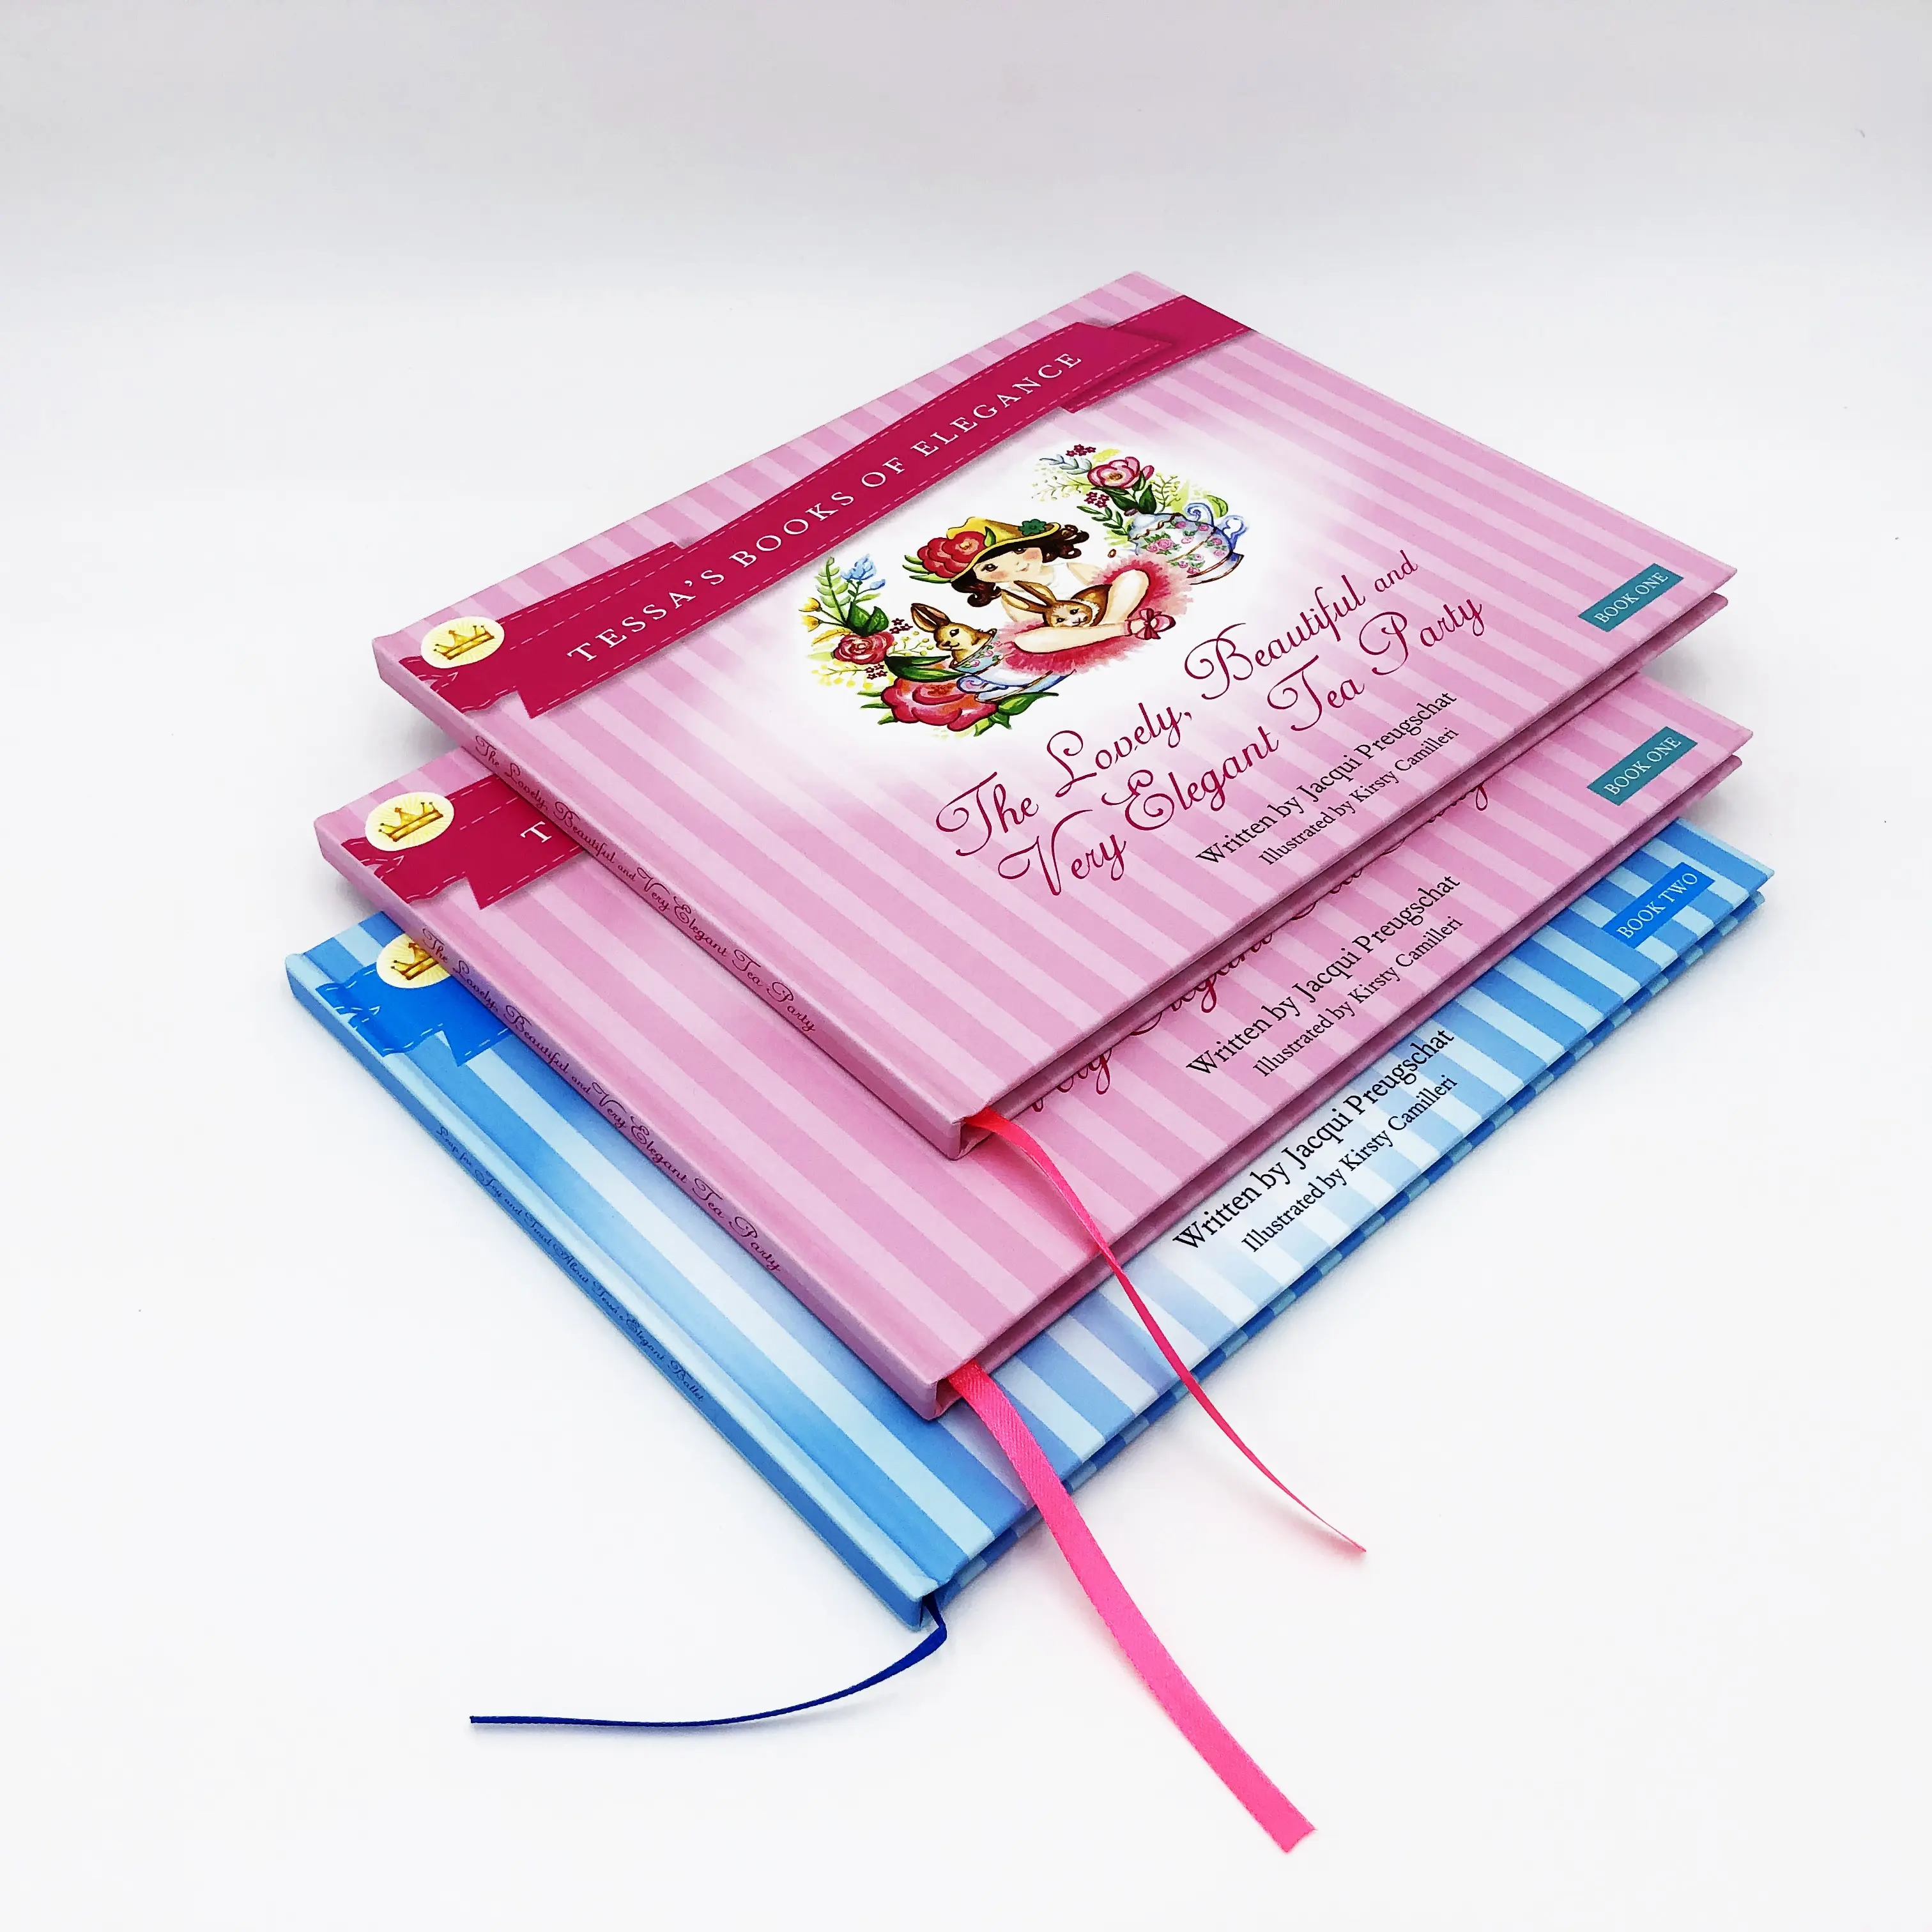 GIGO La Migliore Vendita Elegante Imballaggio Variopinto Dei Bambini Cartone Legatura Libro Bordo di Stampa Stampa del Libro Libro di Bordo